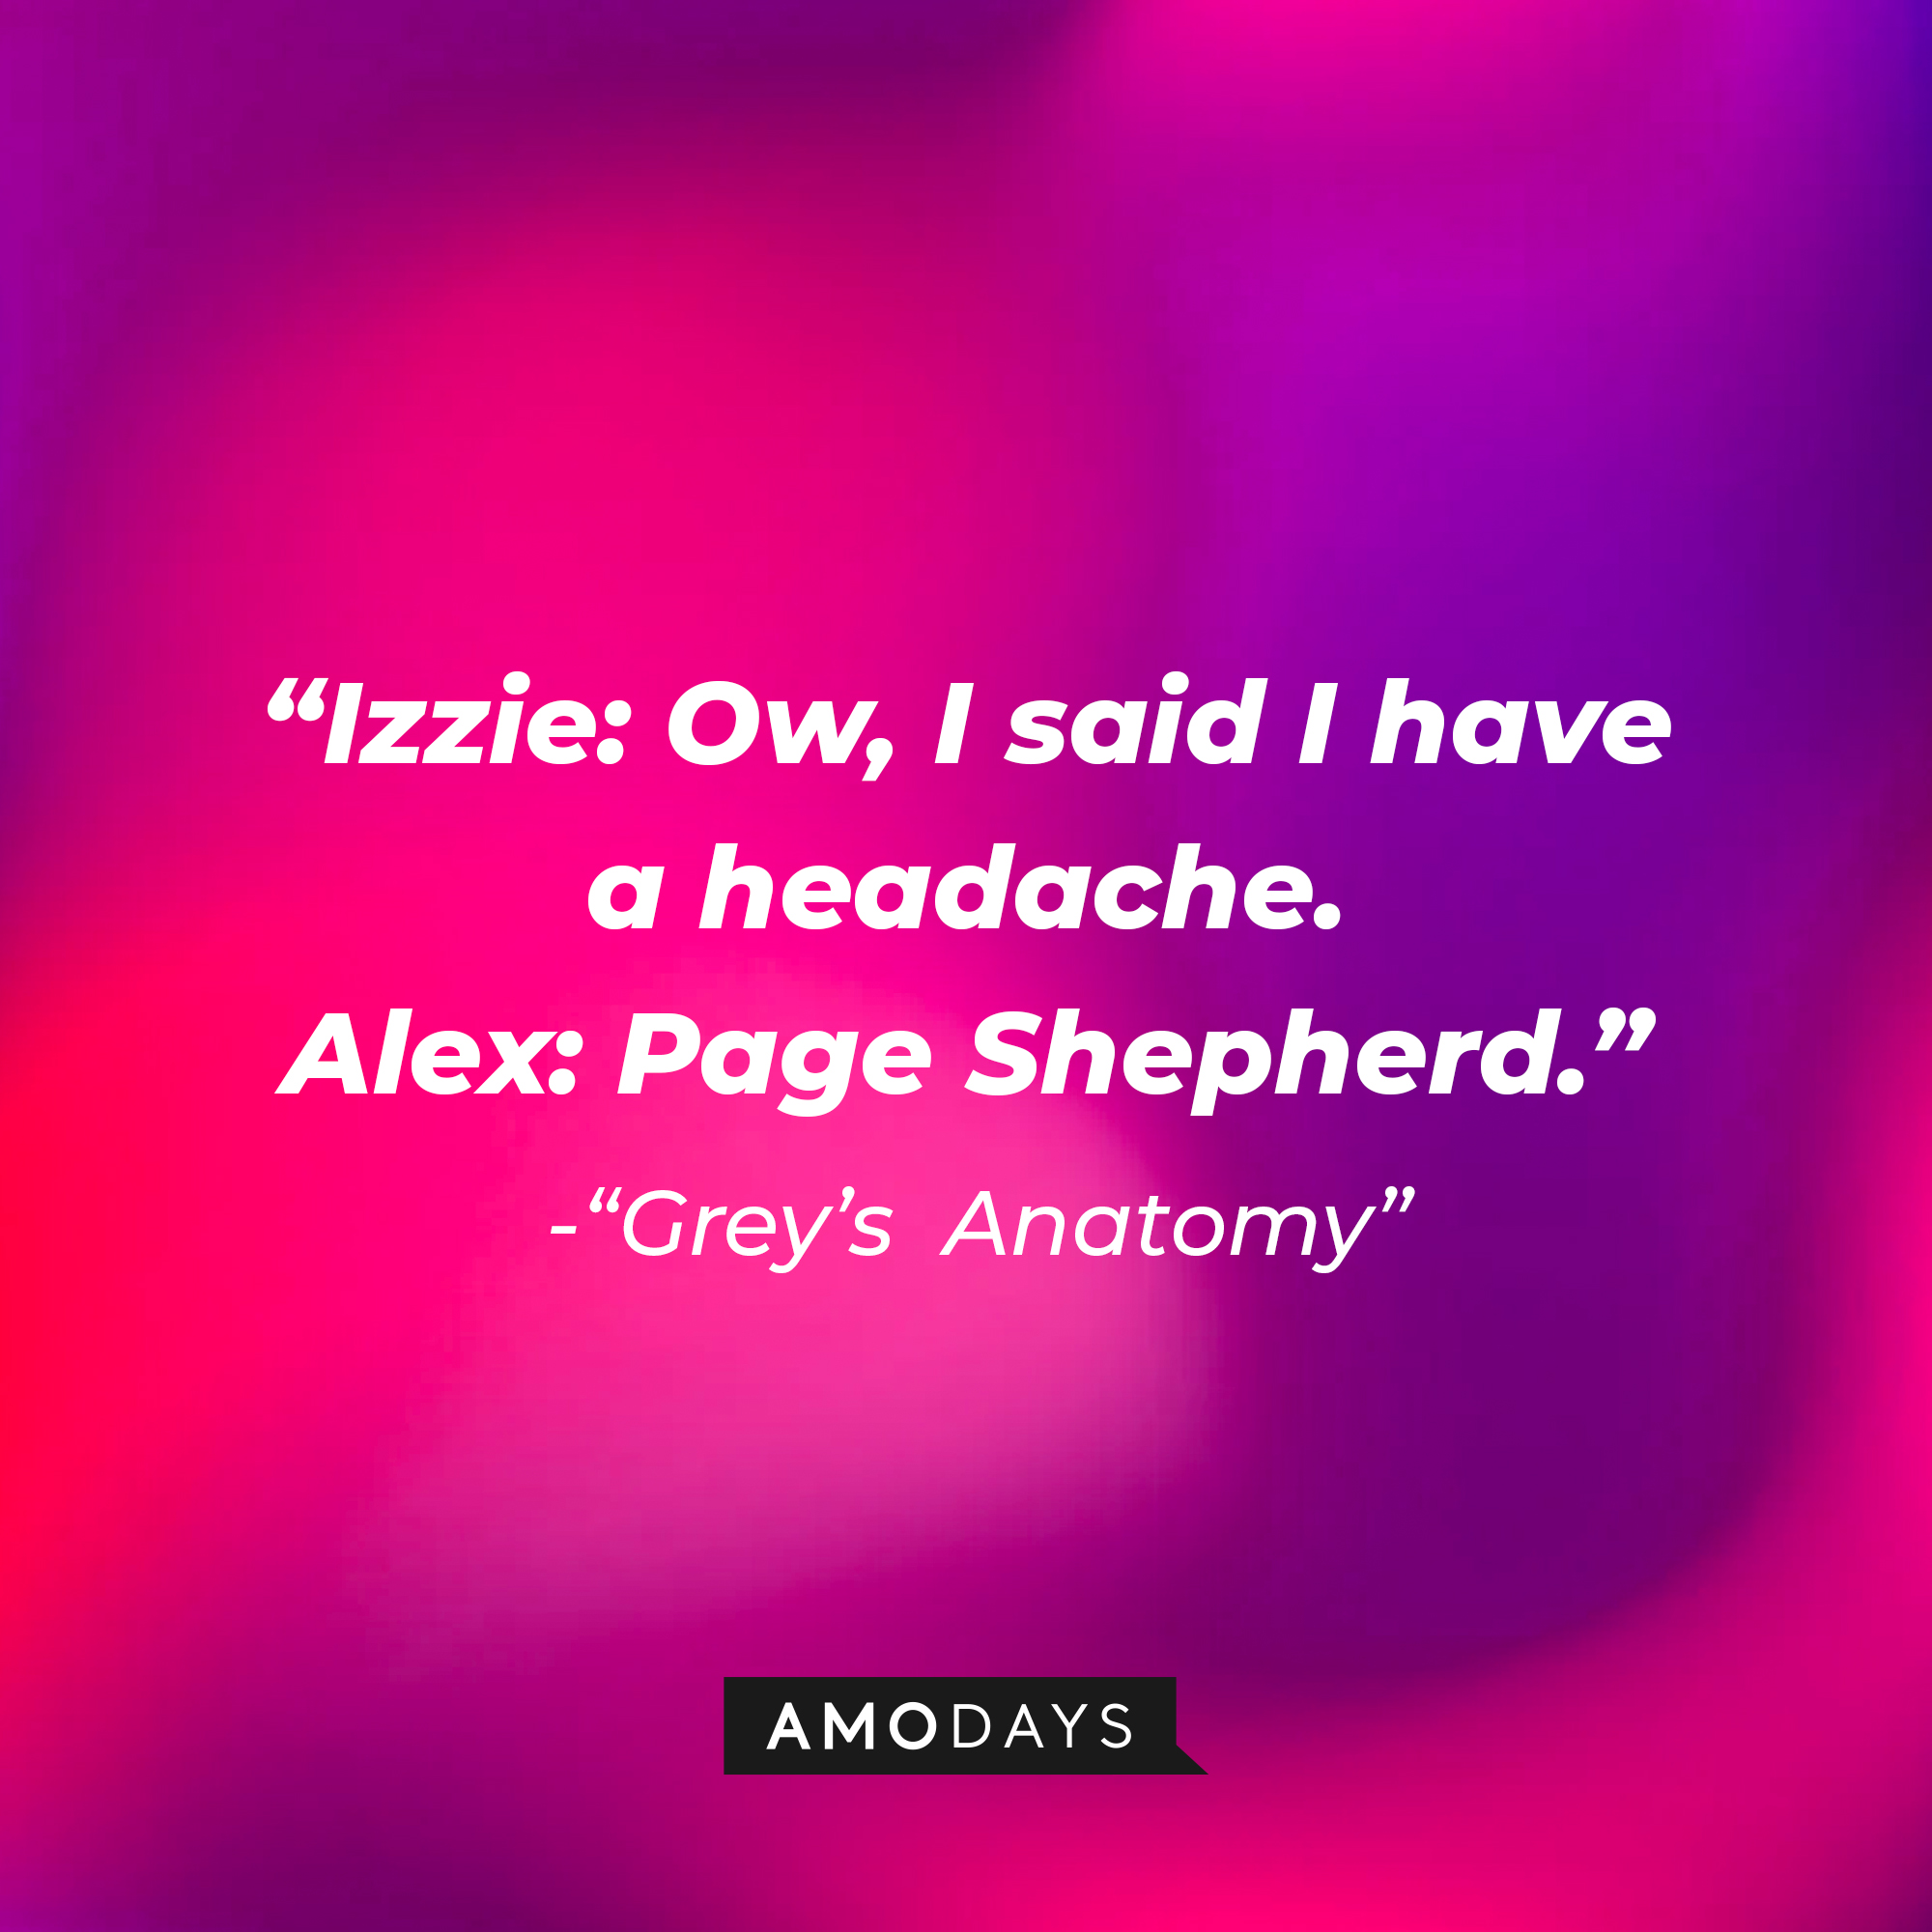 Izzie Stevens' quote: "Ow, I said I have a headache." Alex: "Page Shepherd." | Image: Amodays